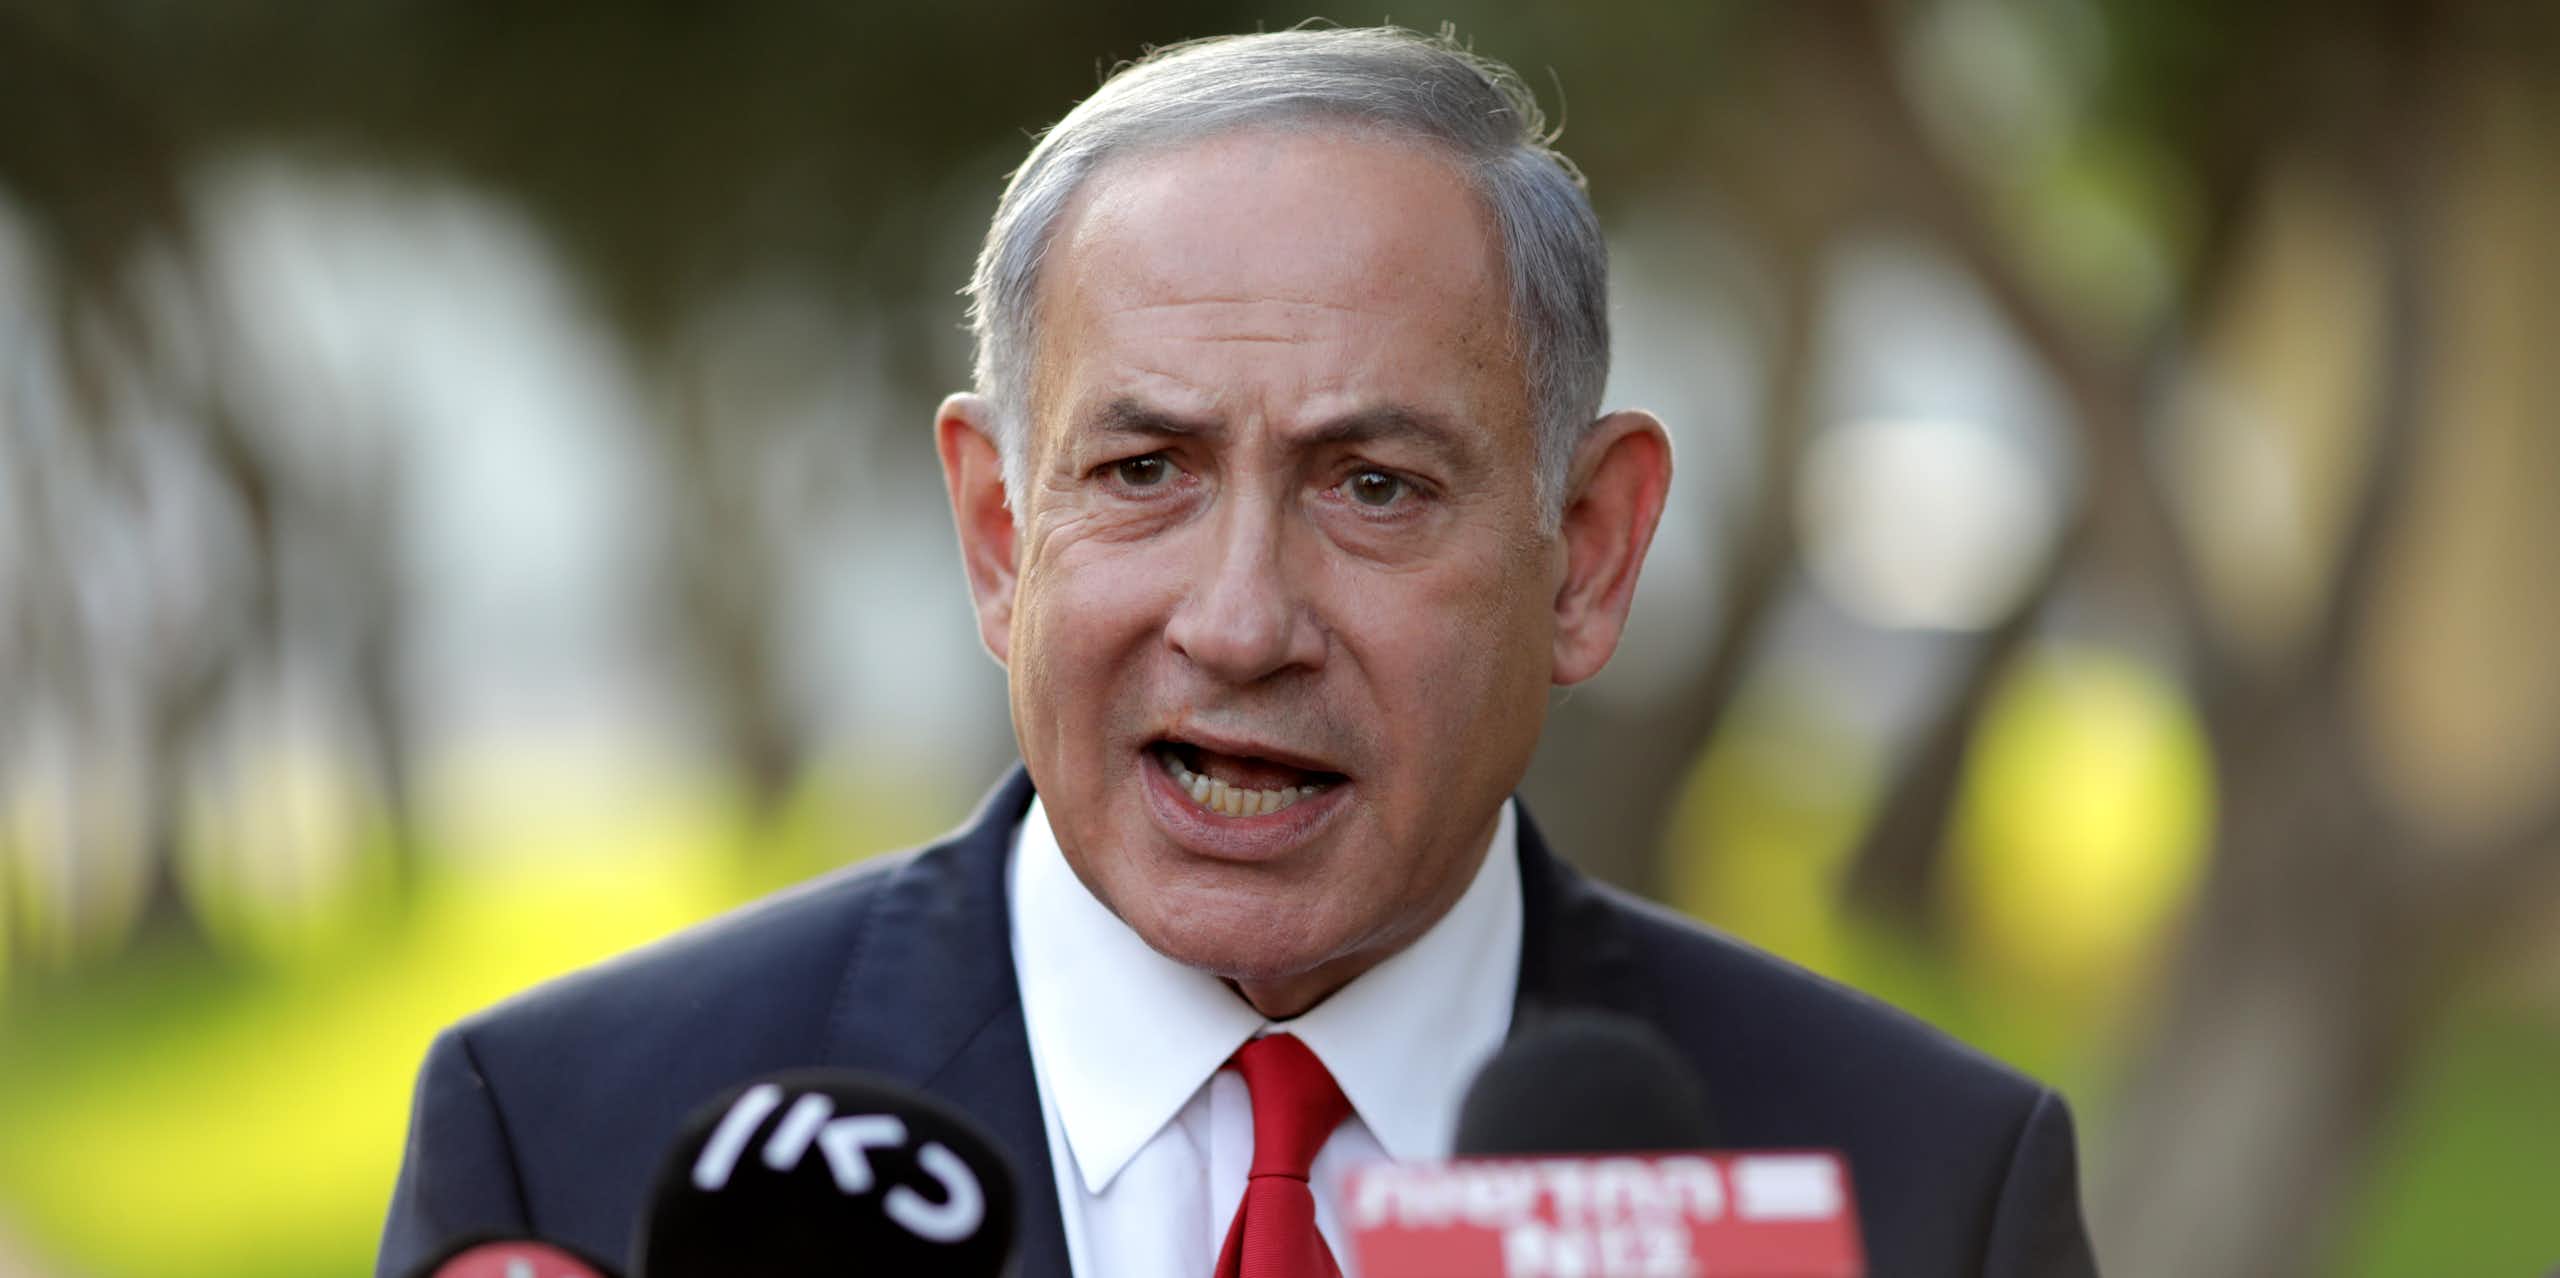 Israeli prime minister Benjamin Netanyahu speaks to journalists